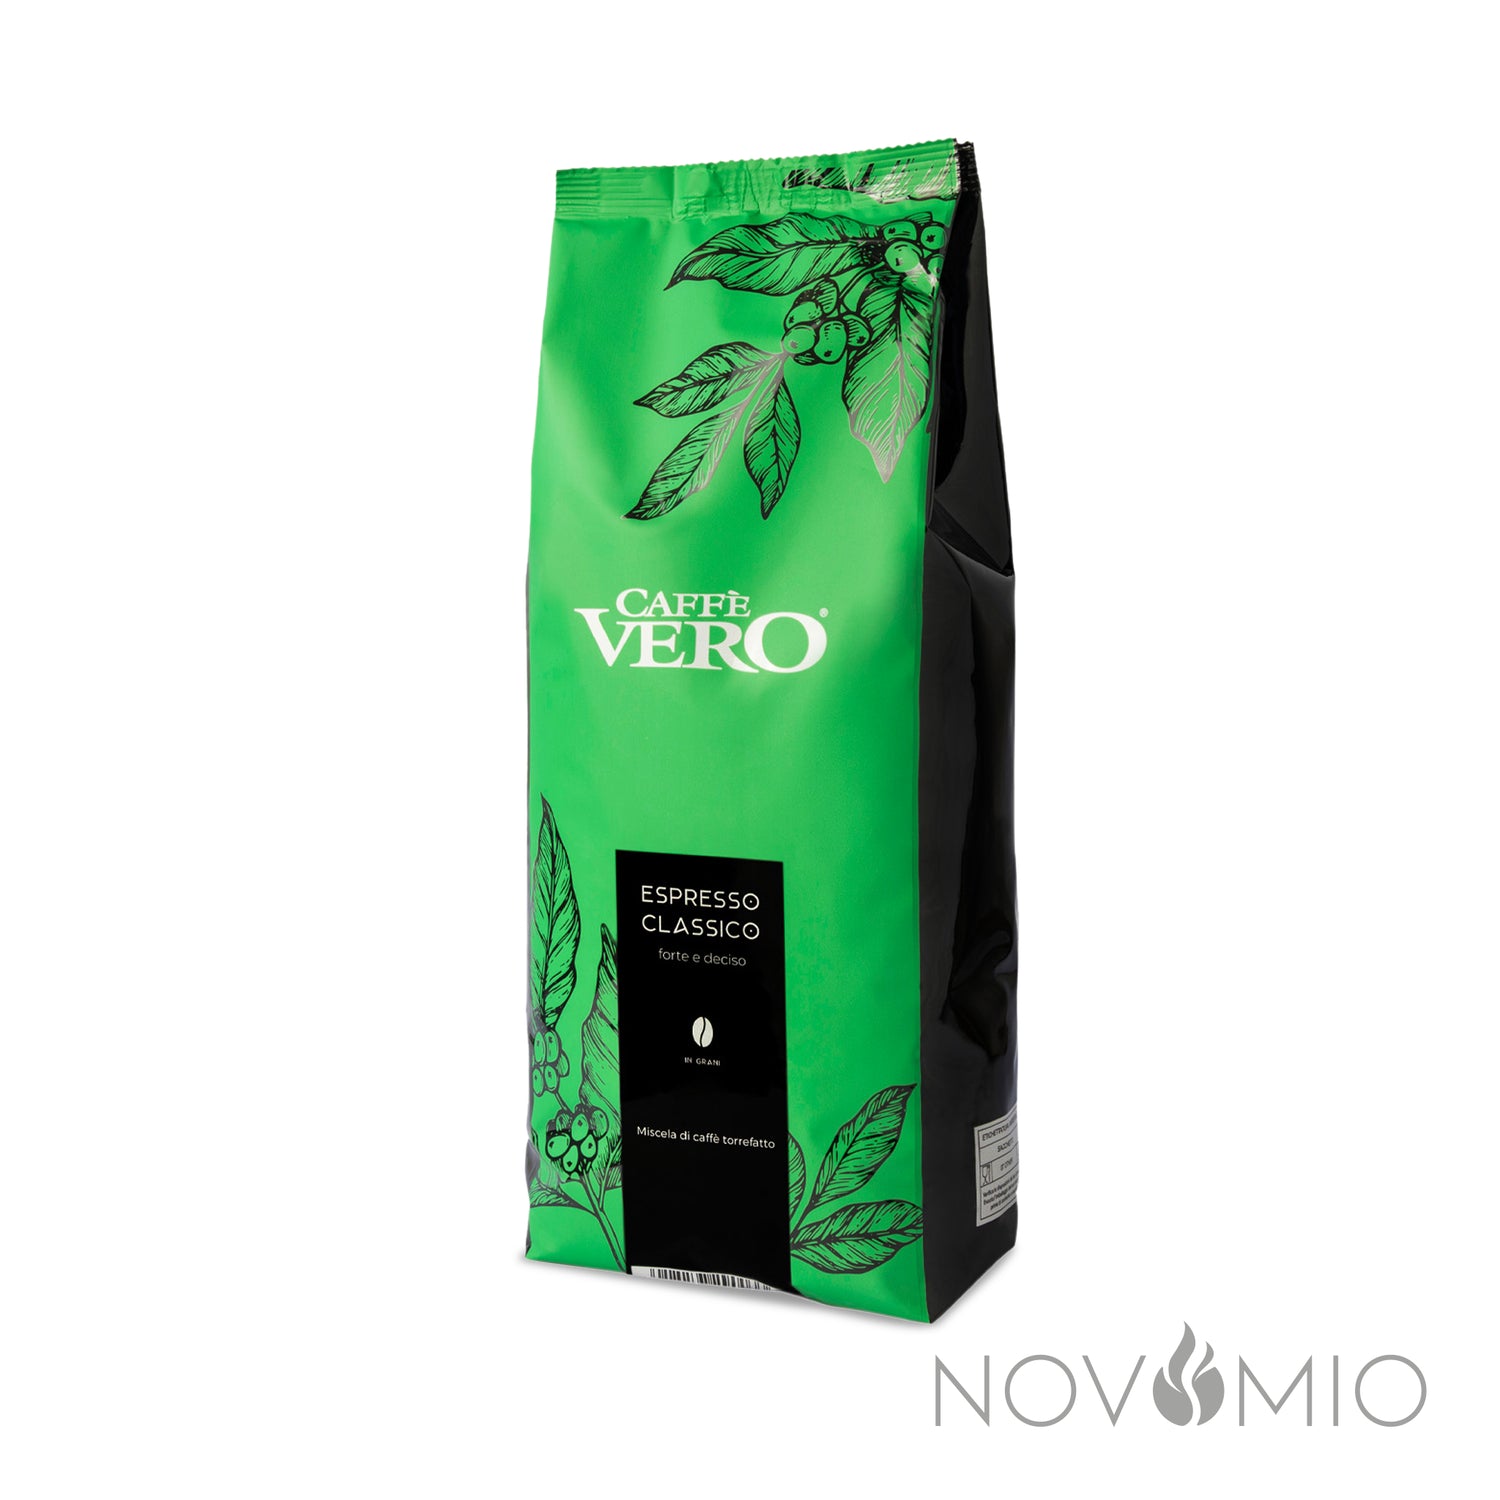 Caffe Vero - Espresso Classico 1 KG